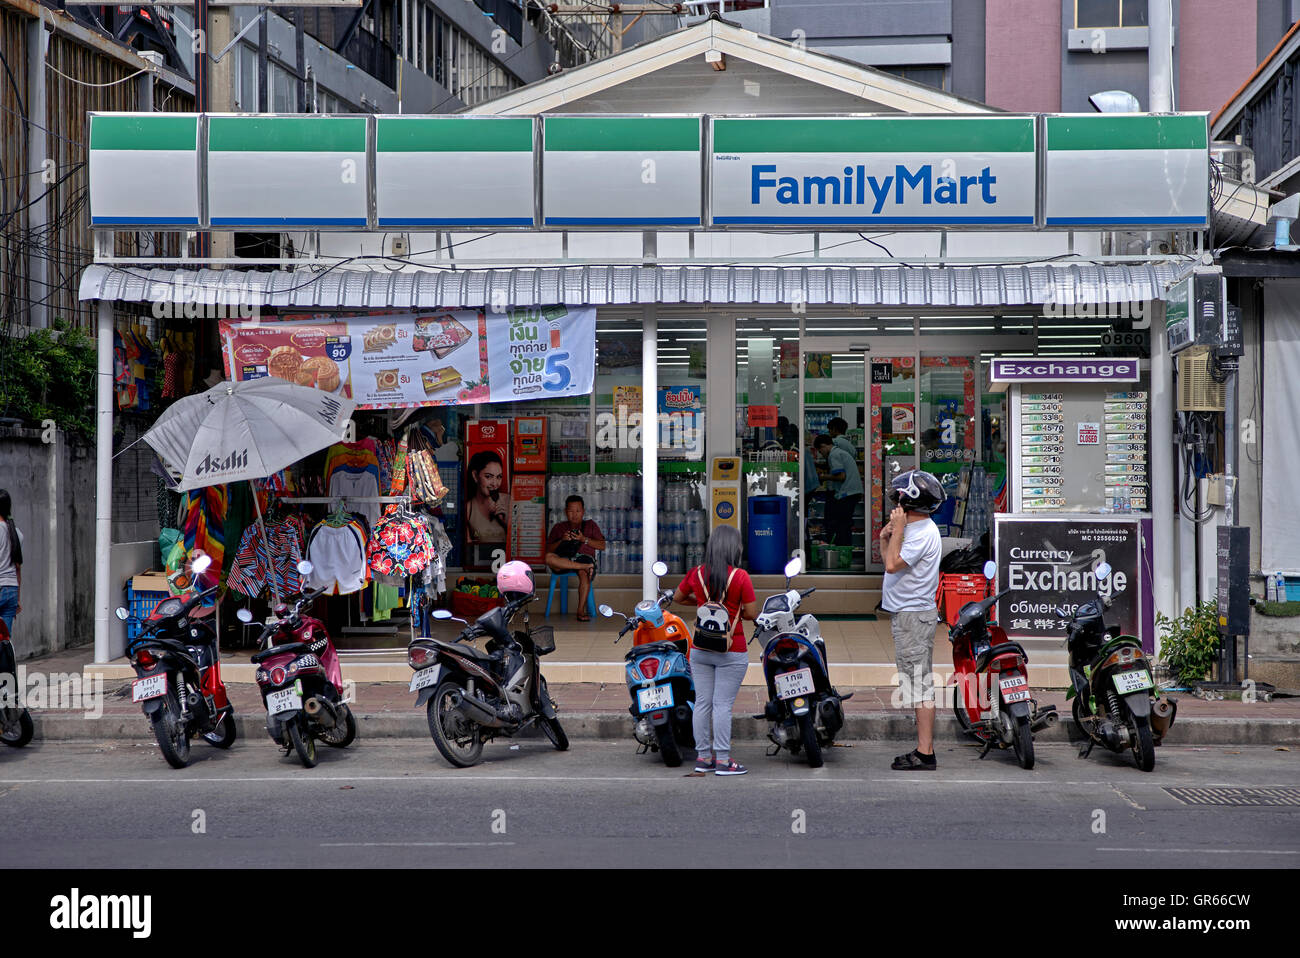 Family Mart convenience store. Thailandia SUDEST ASIATICO Foto Stock